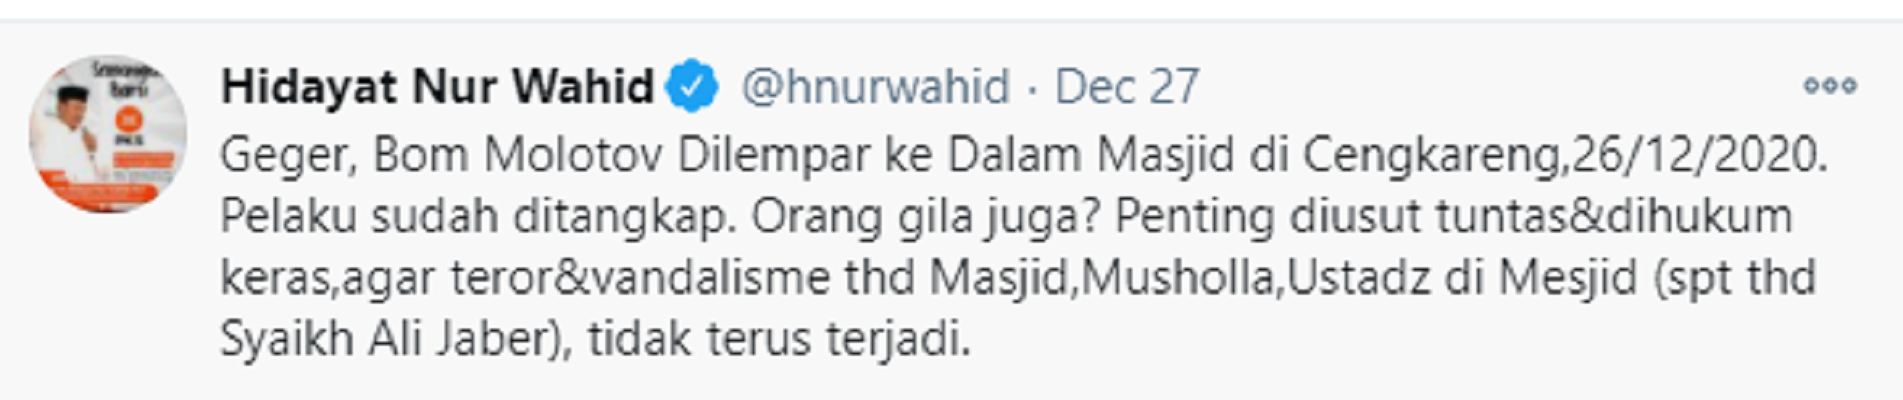 Cuitan Hidayat Nur Wahid soal kondisi kejiwaan pelaku teror bom molotov.